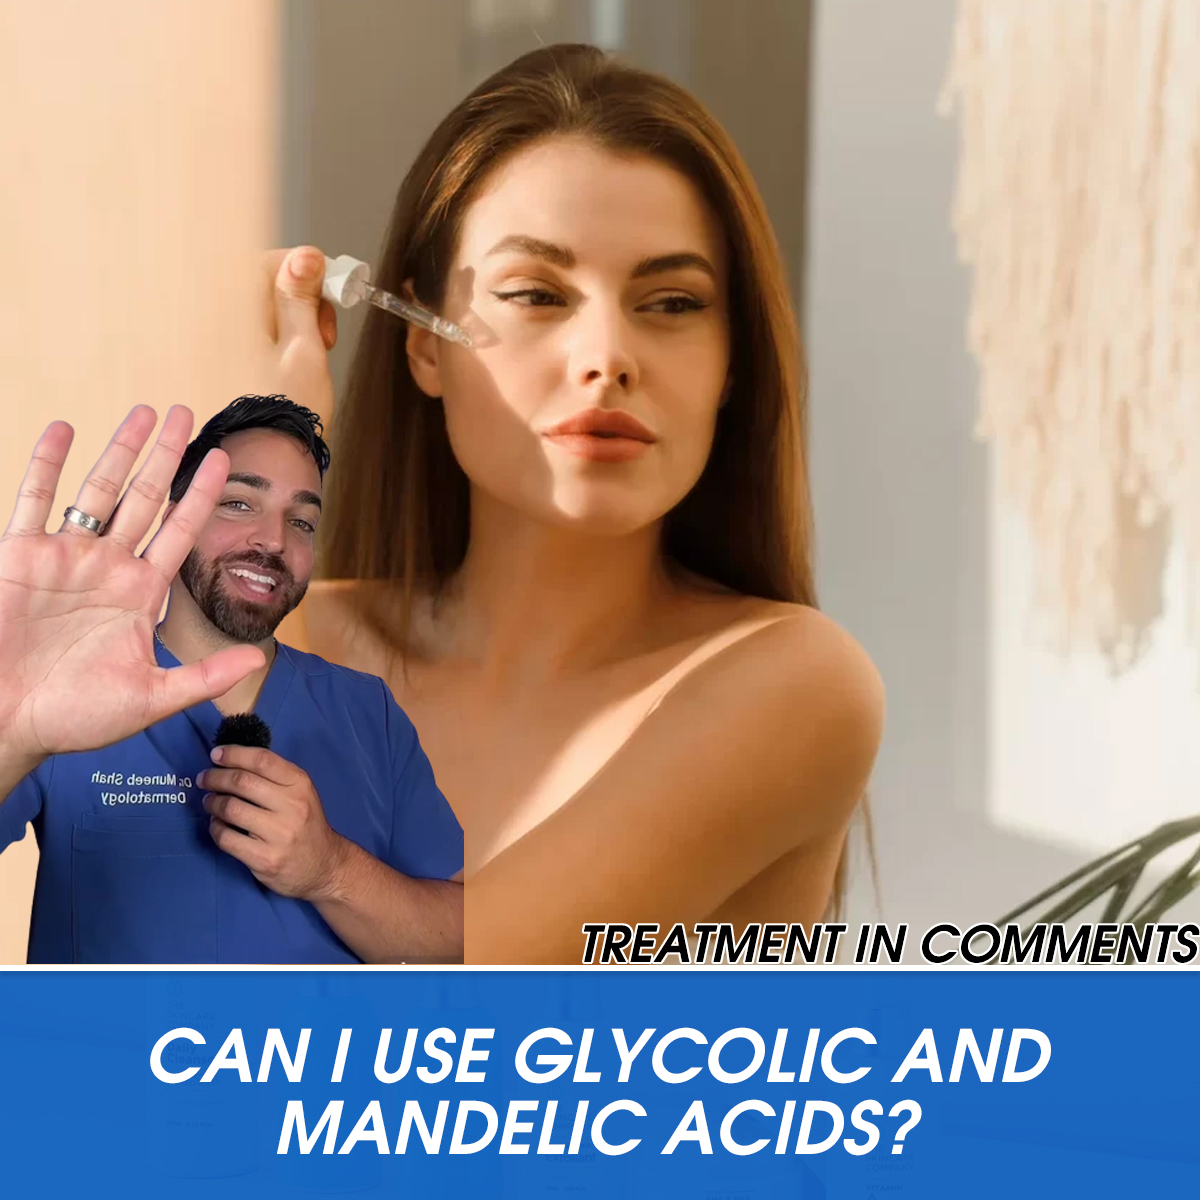 Can I use glycolic and mandelic acids?